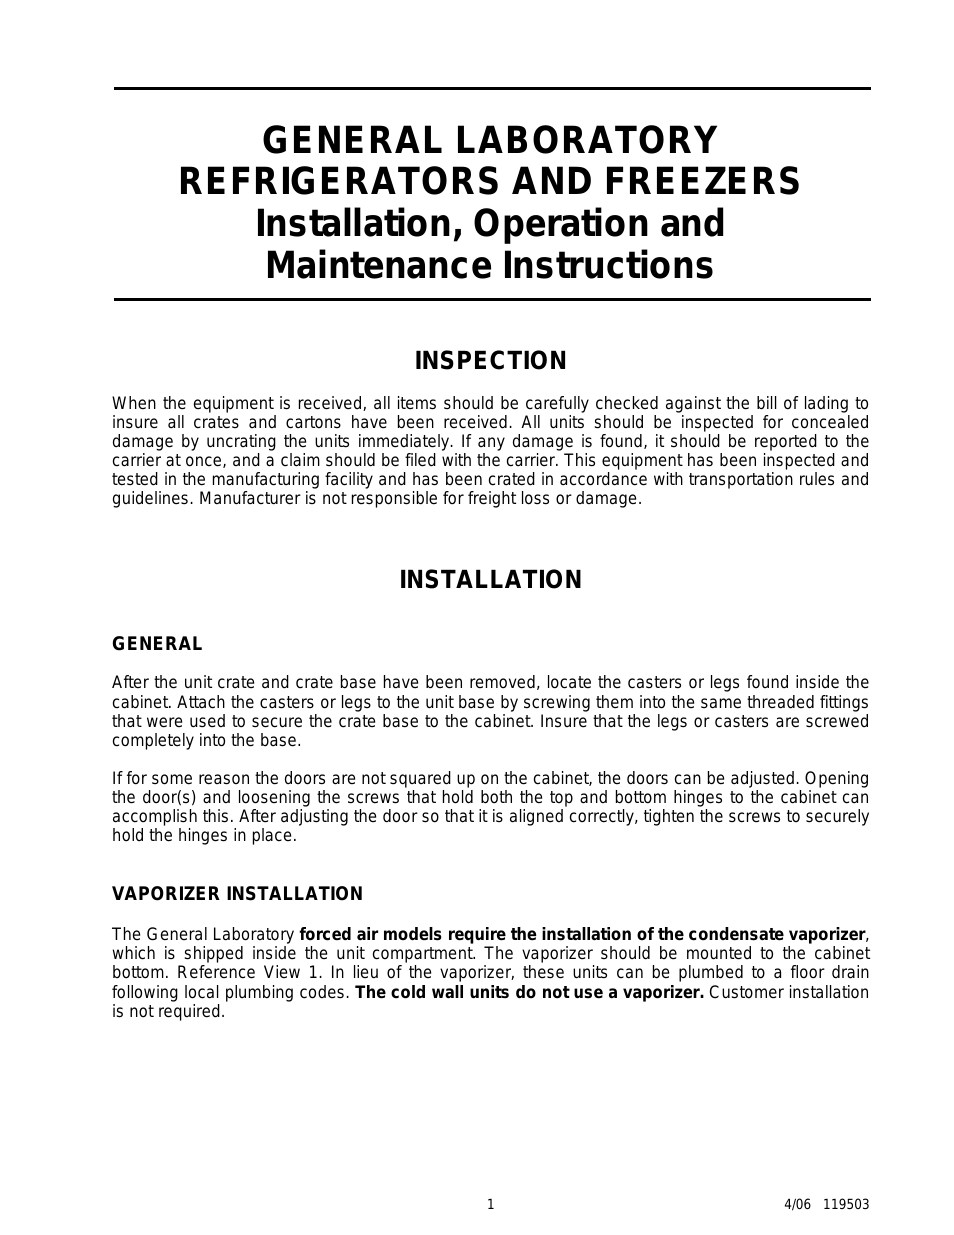 General Laboratory Refrigerators & Freezers